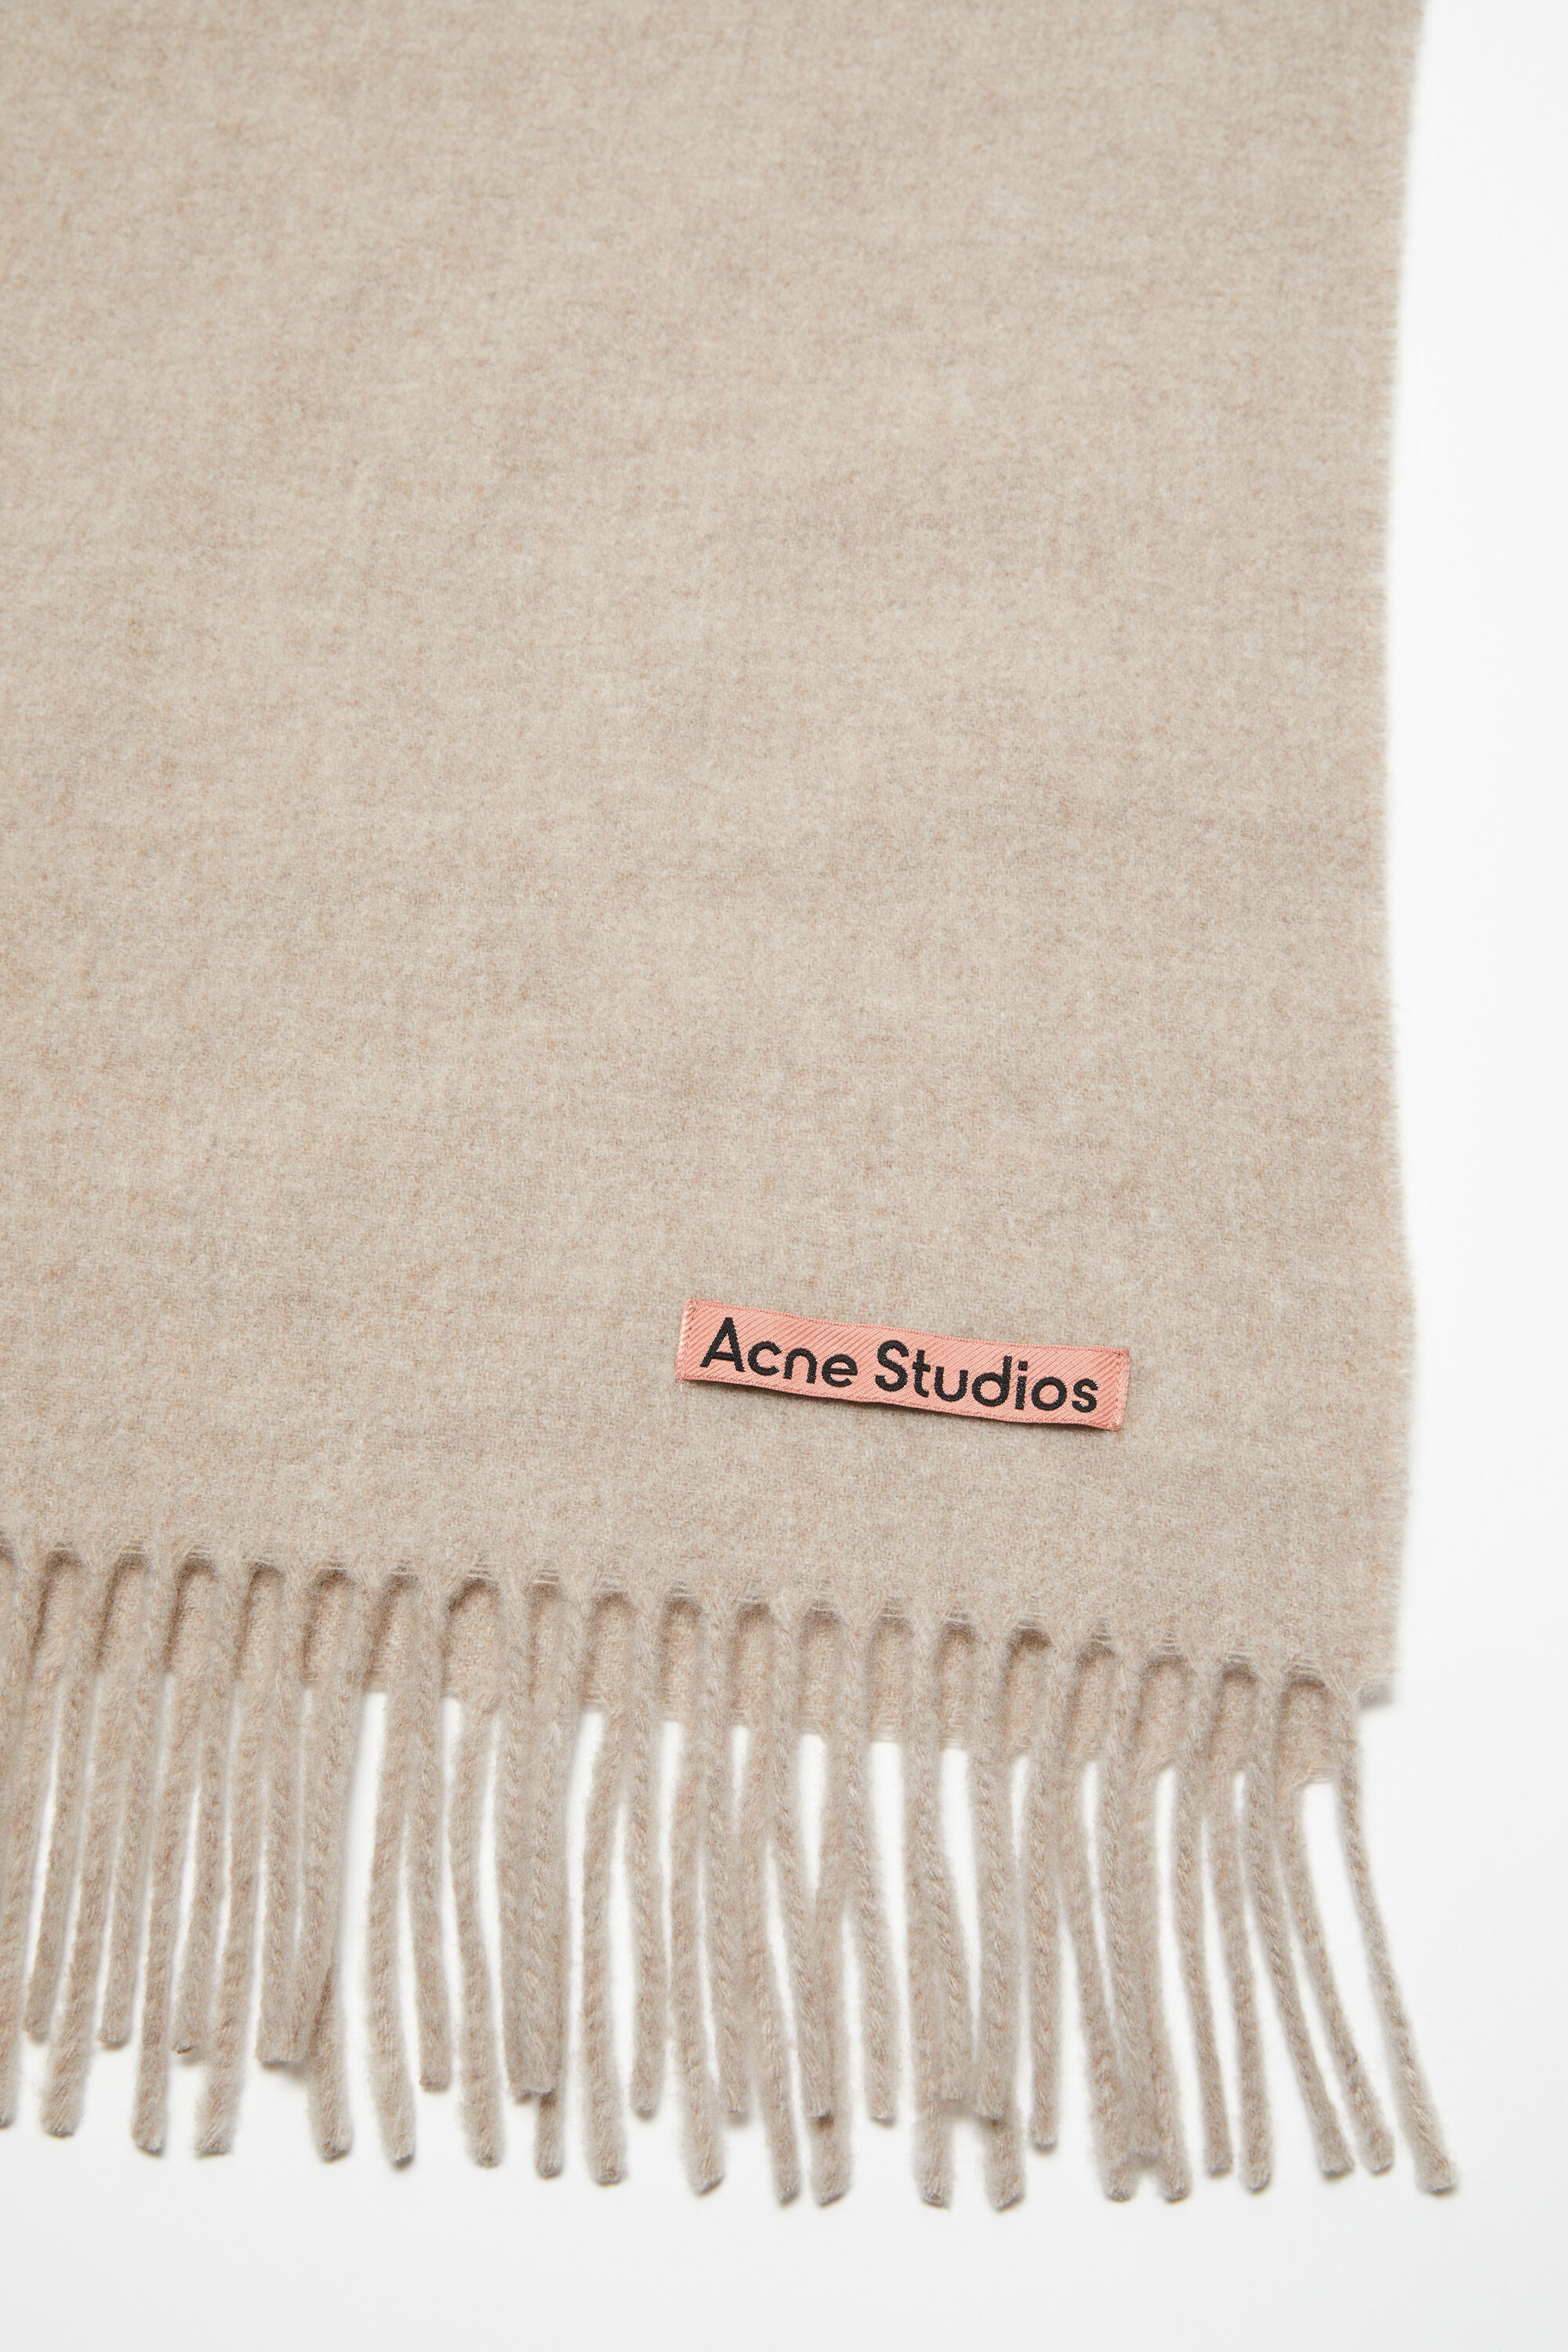 Acne  Studios フリンジウールスカーフ  オーバーサイズ  ブラックストール